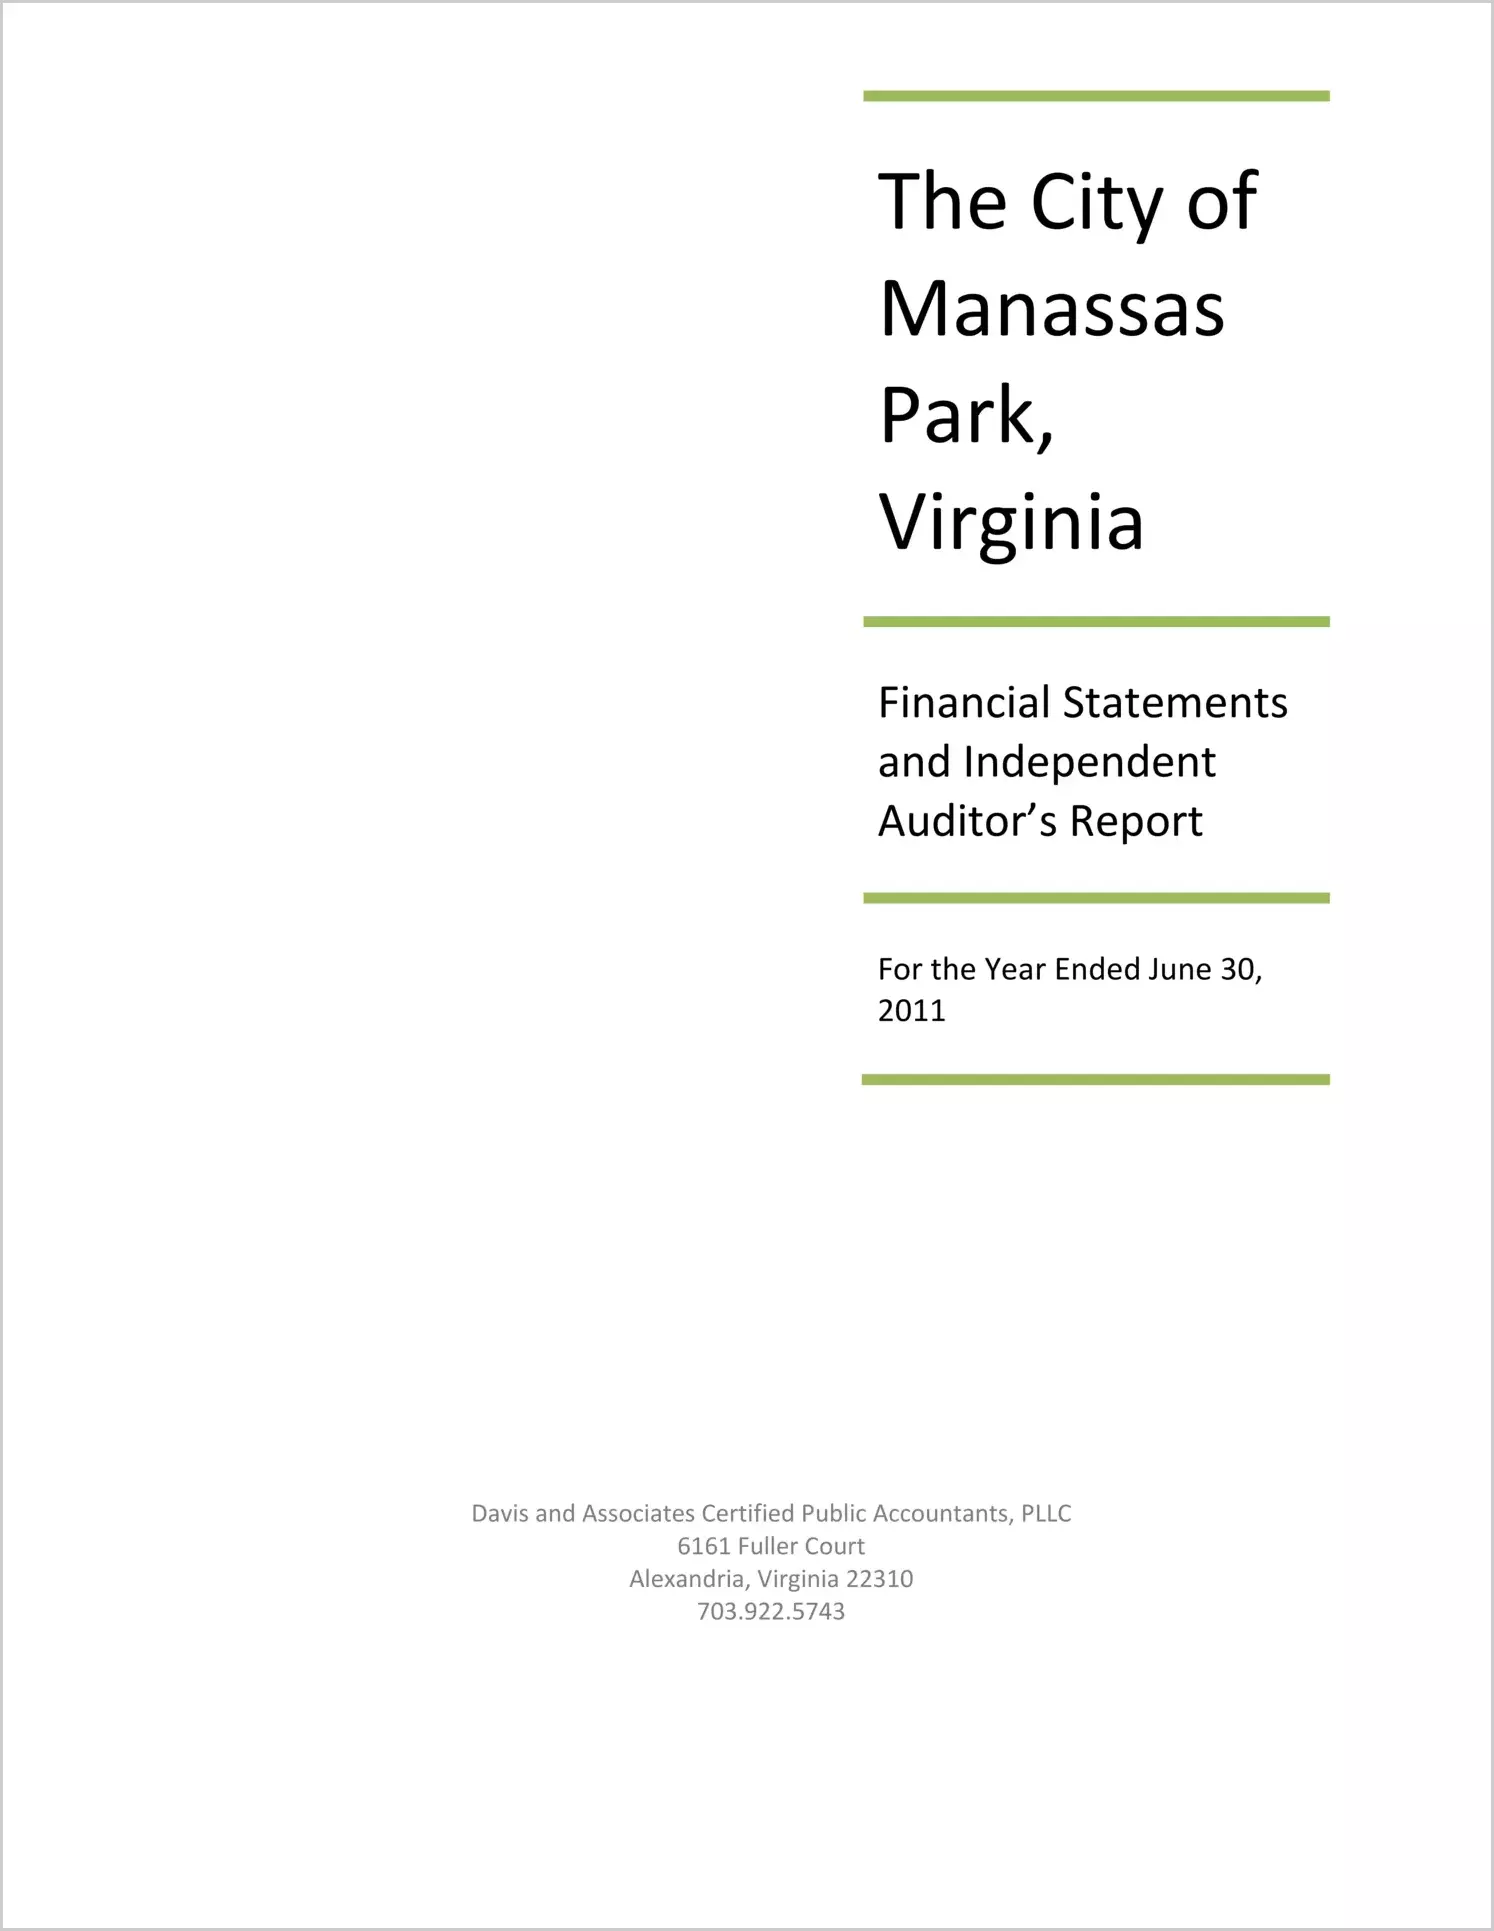 2011 Annual Financial Report for City of Manassas Park